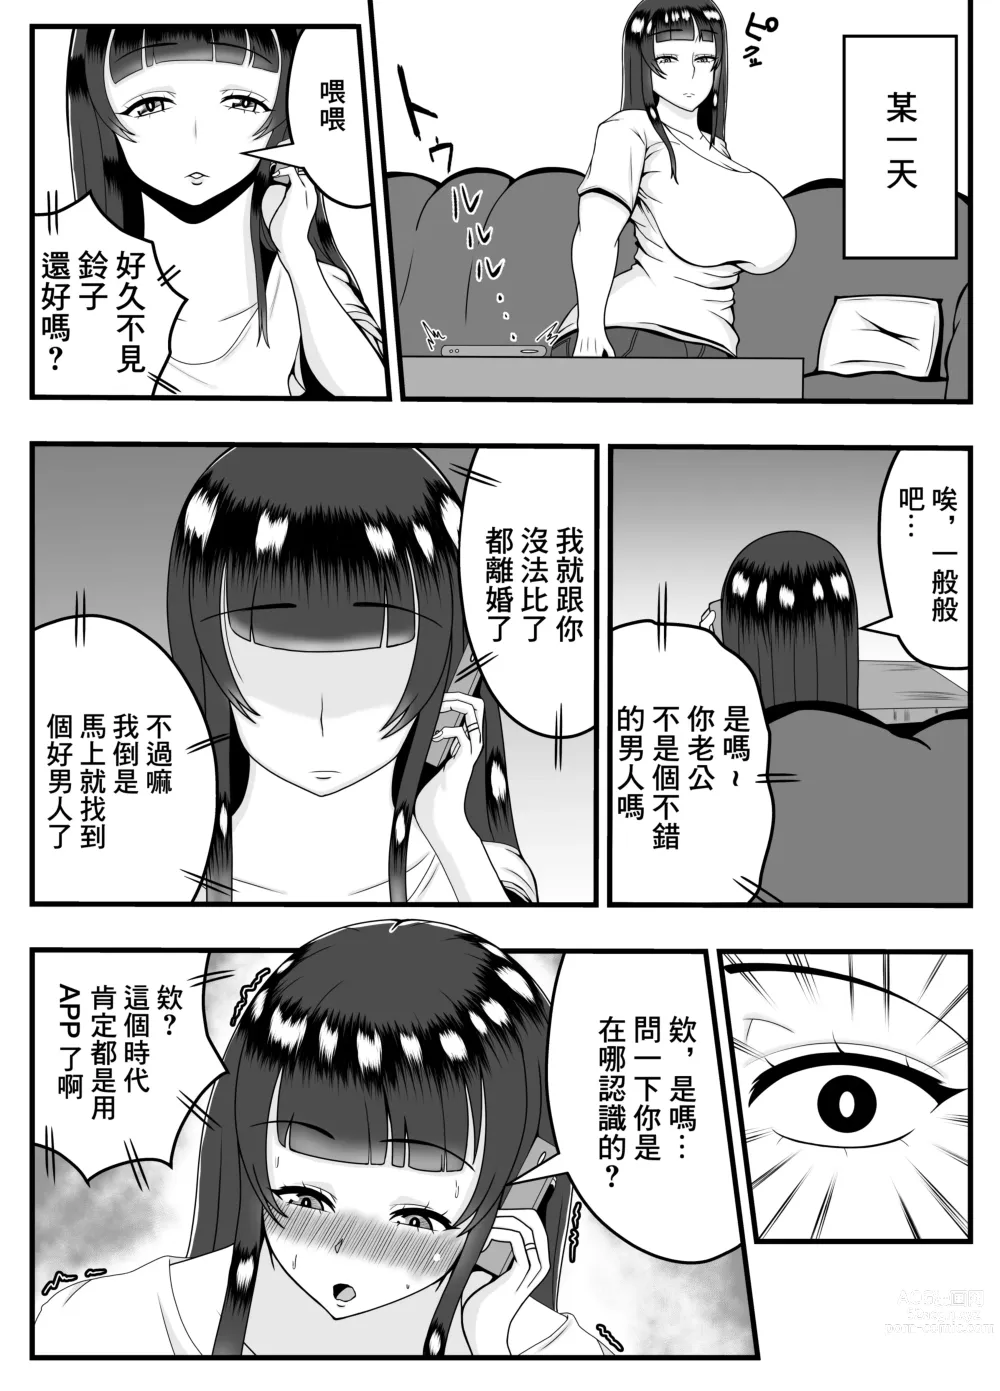 Page 5 of doujinshi 用APP和相遇的「他」人妻打開了淫亂開關